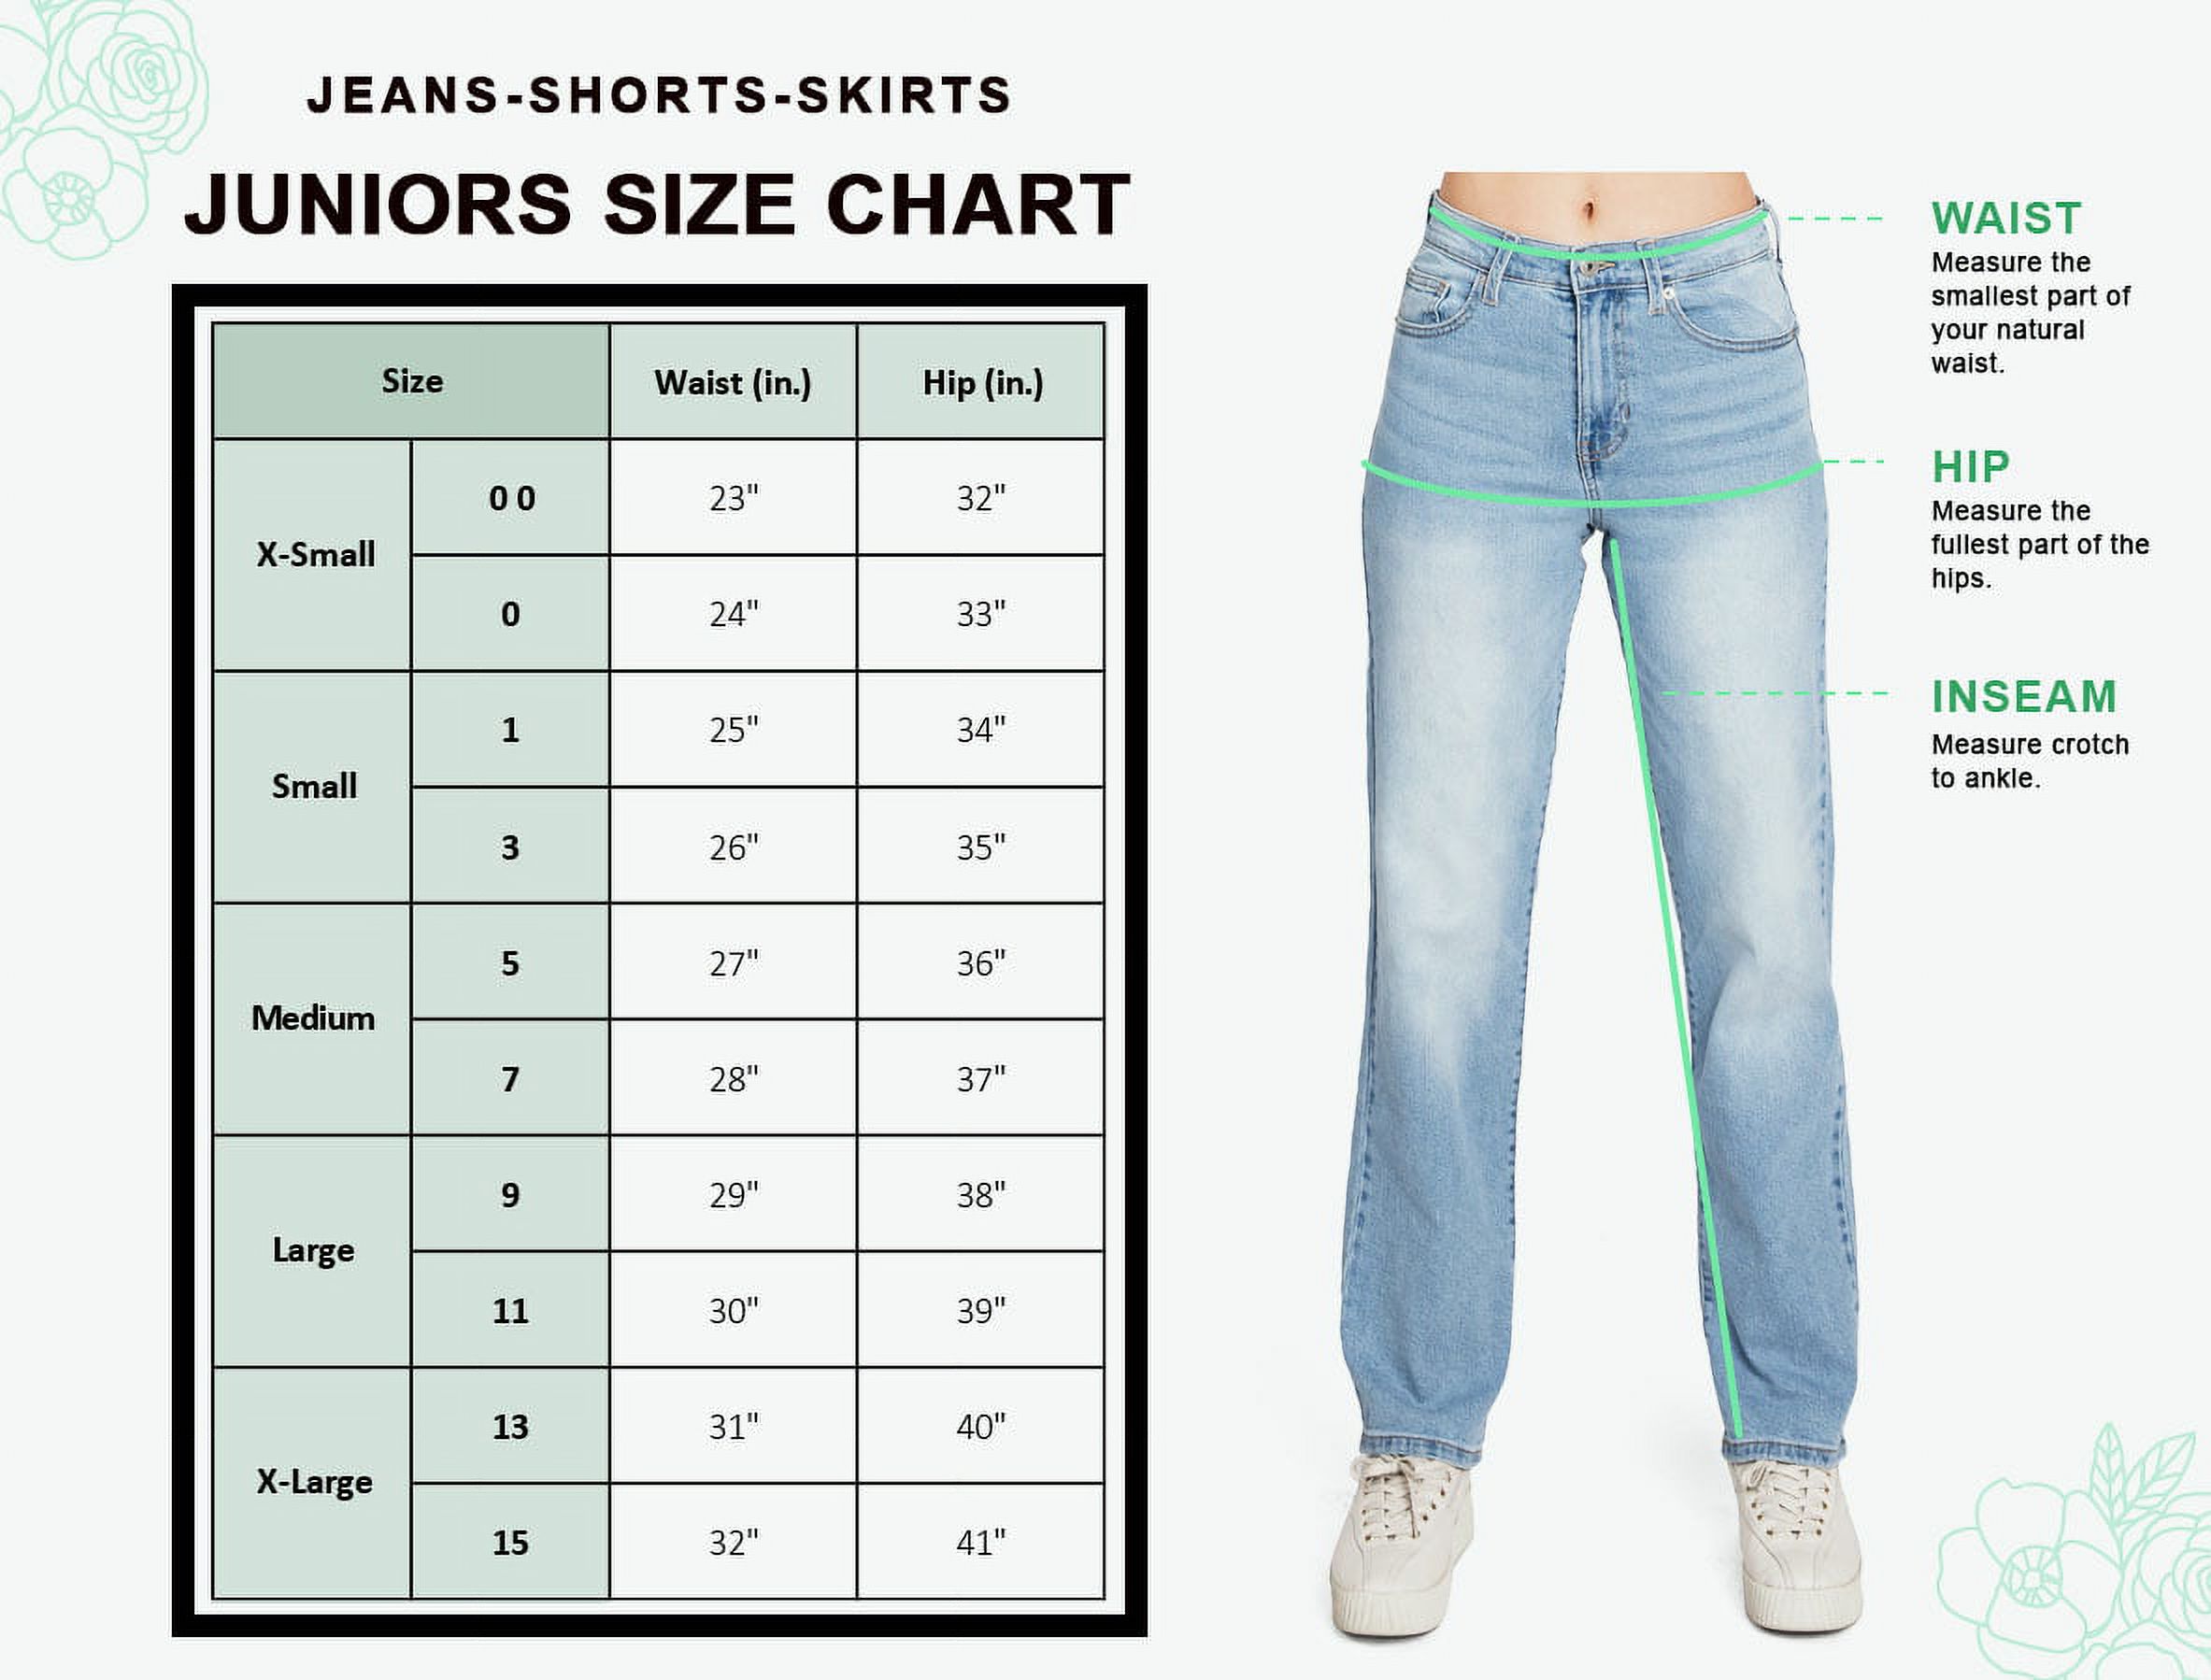 Wax Jean Women's Juniors Distressed High Rise Ankle Skinny Jeans (0, Medium Denim) - image 5 of 5